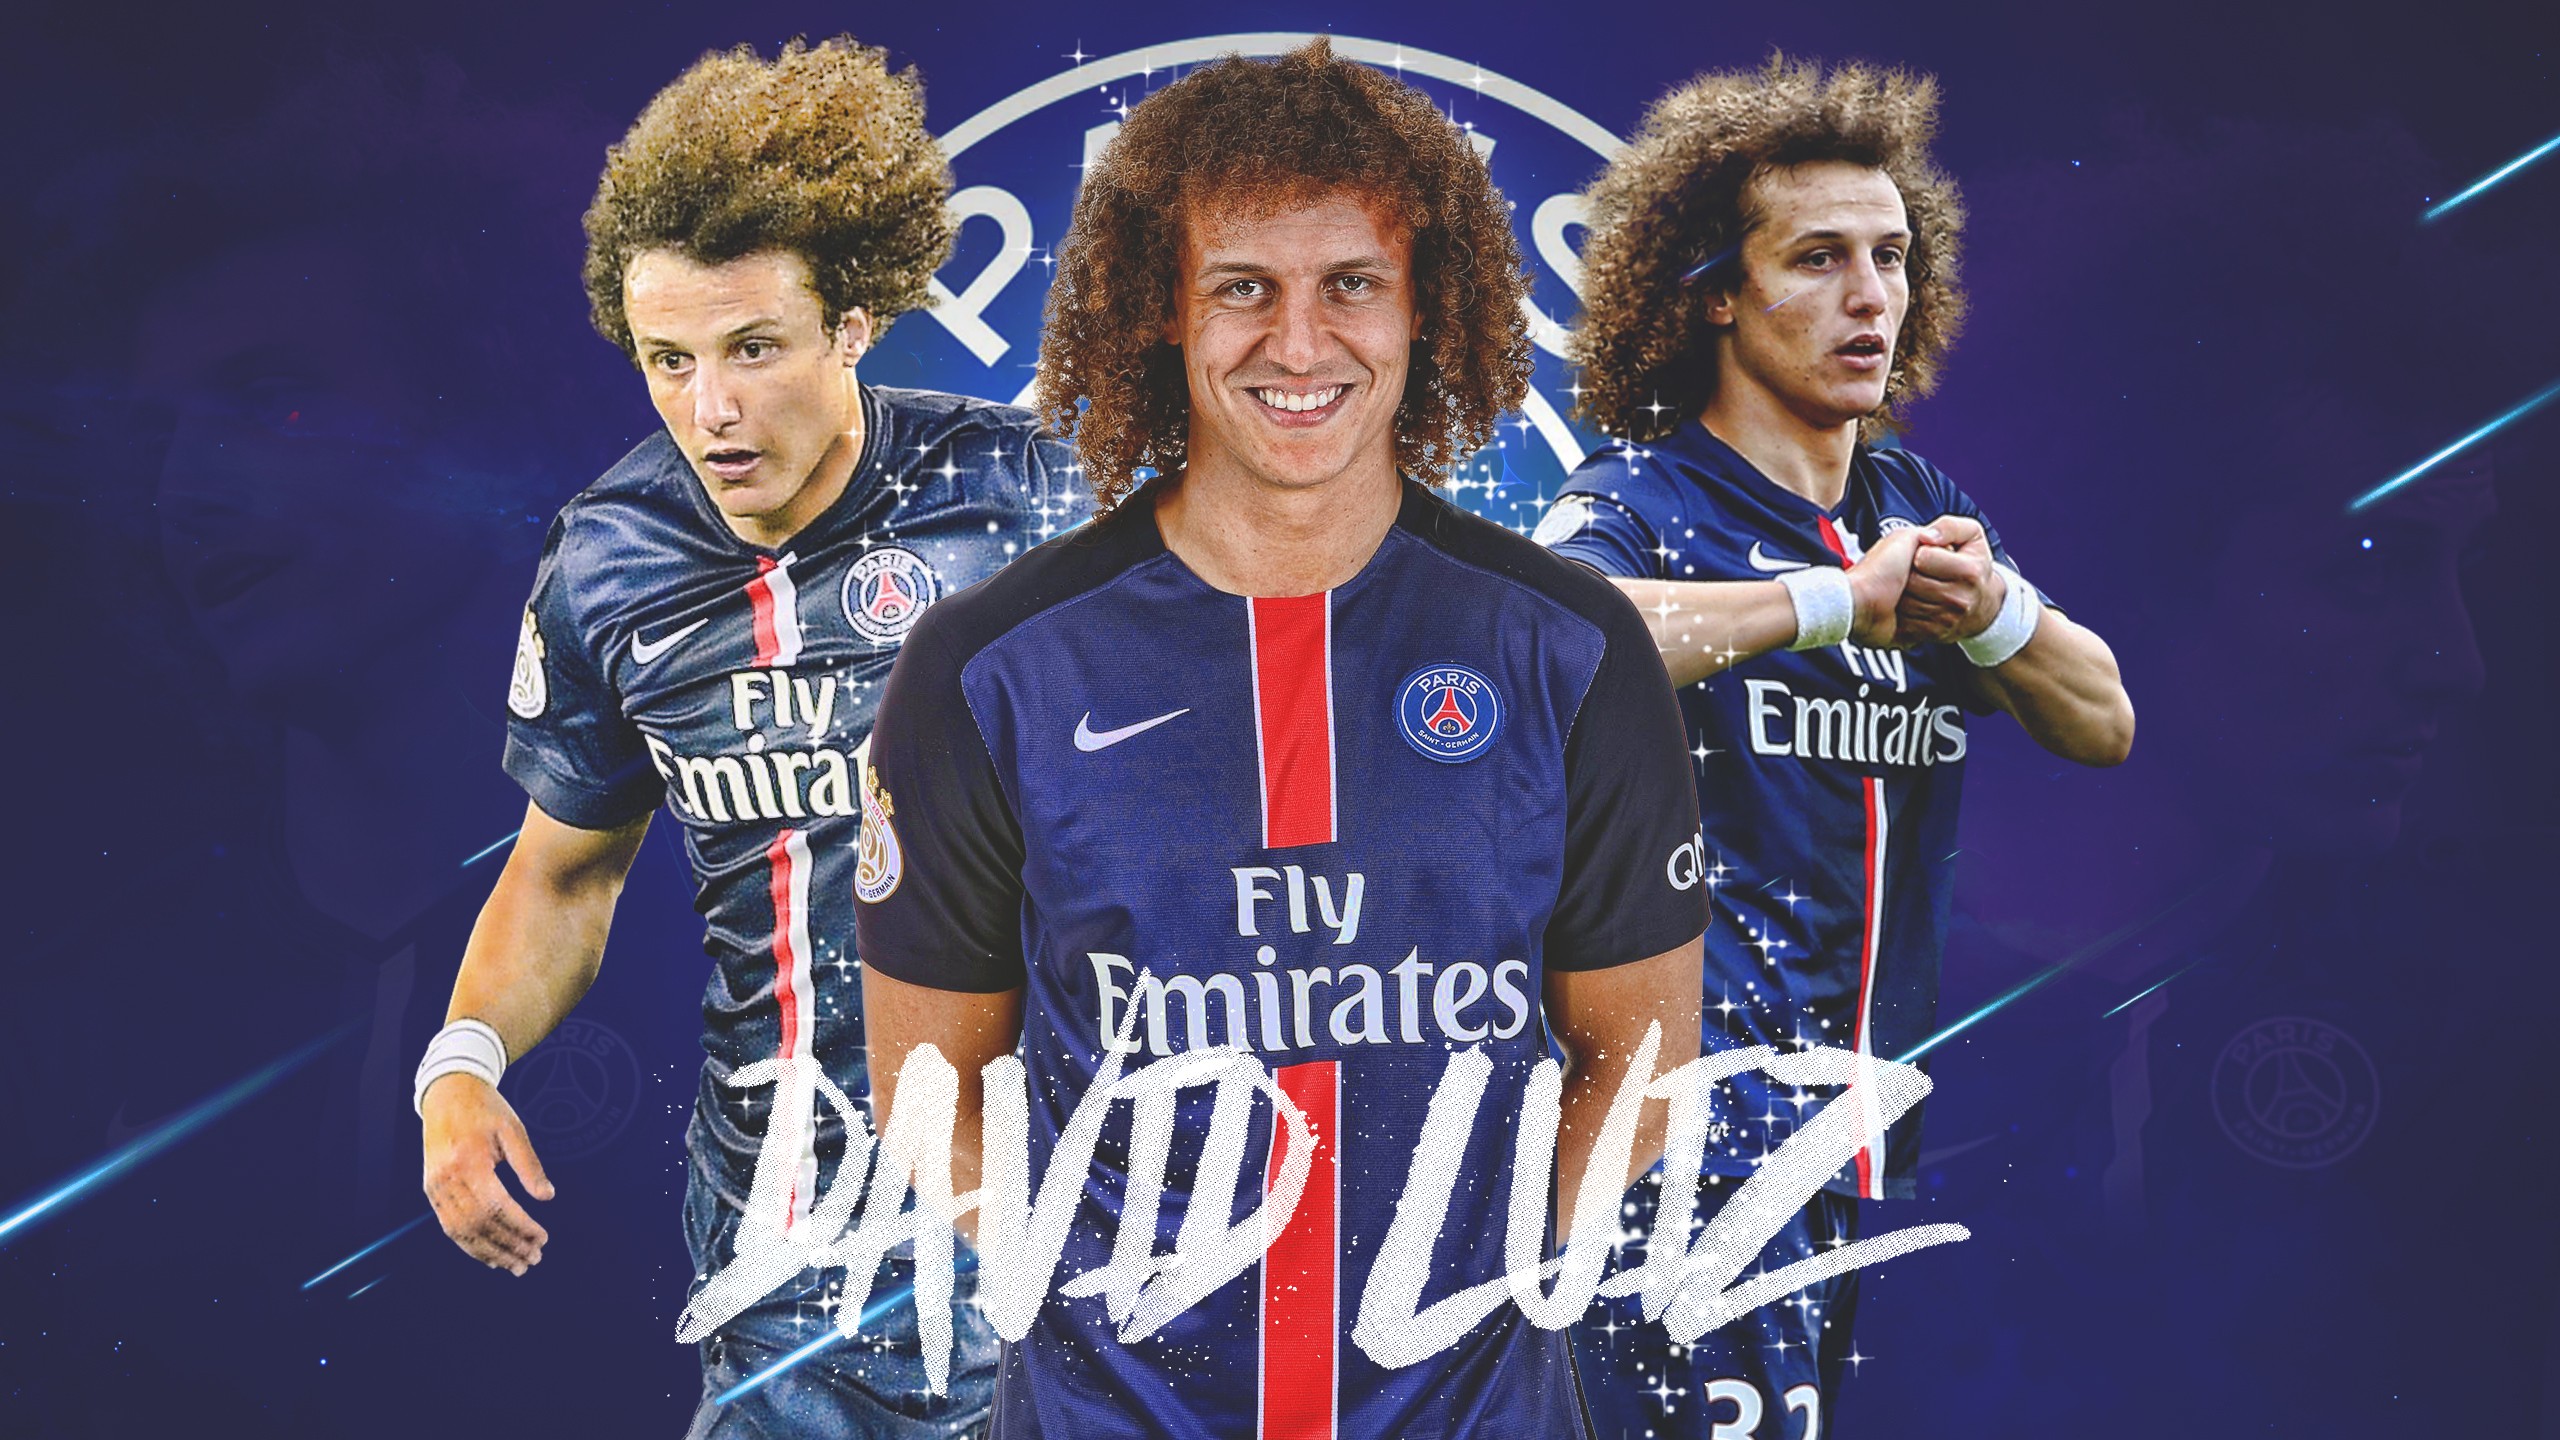 David Luiz, Footballers, P.S.G., Blue Wallpaper